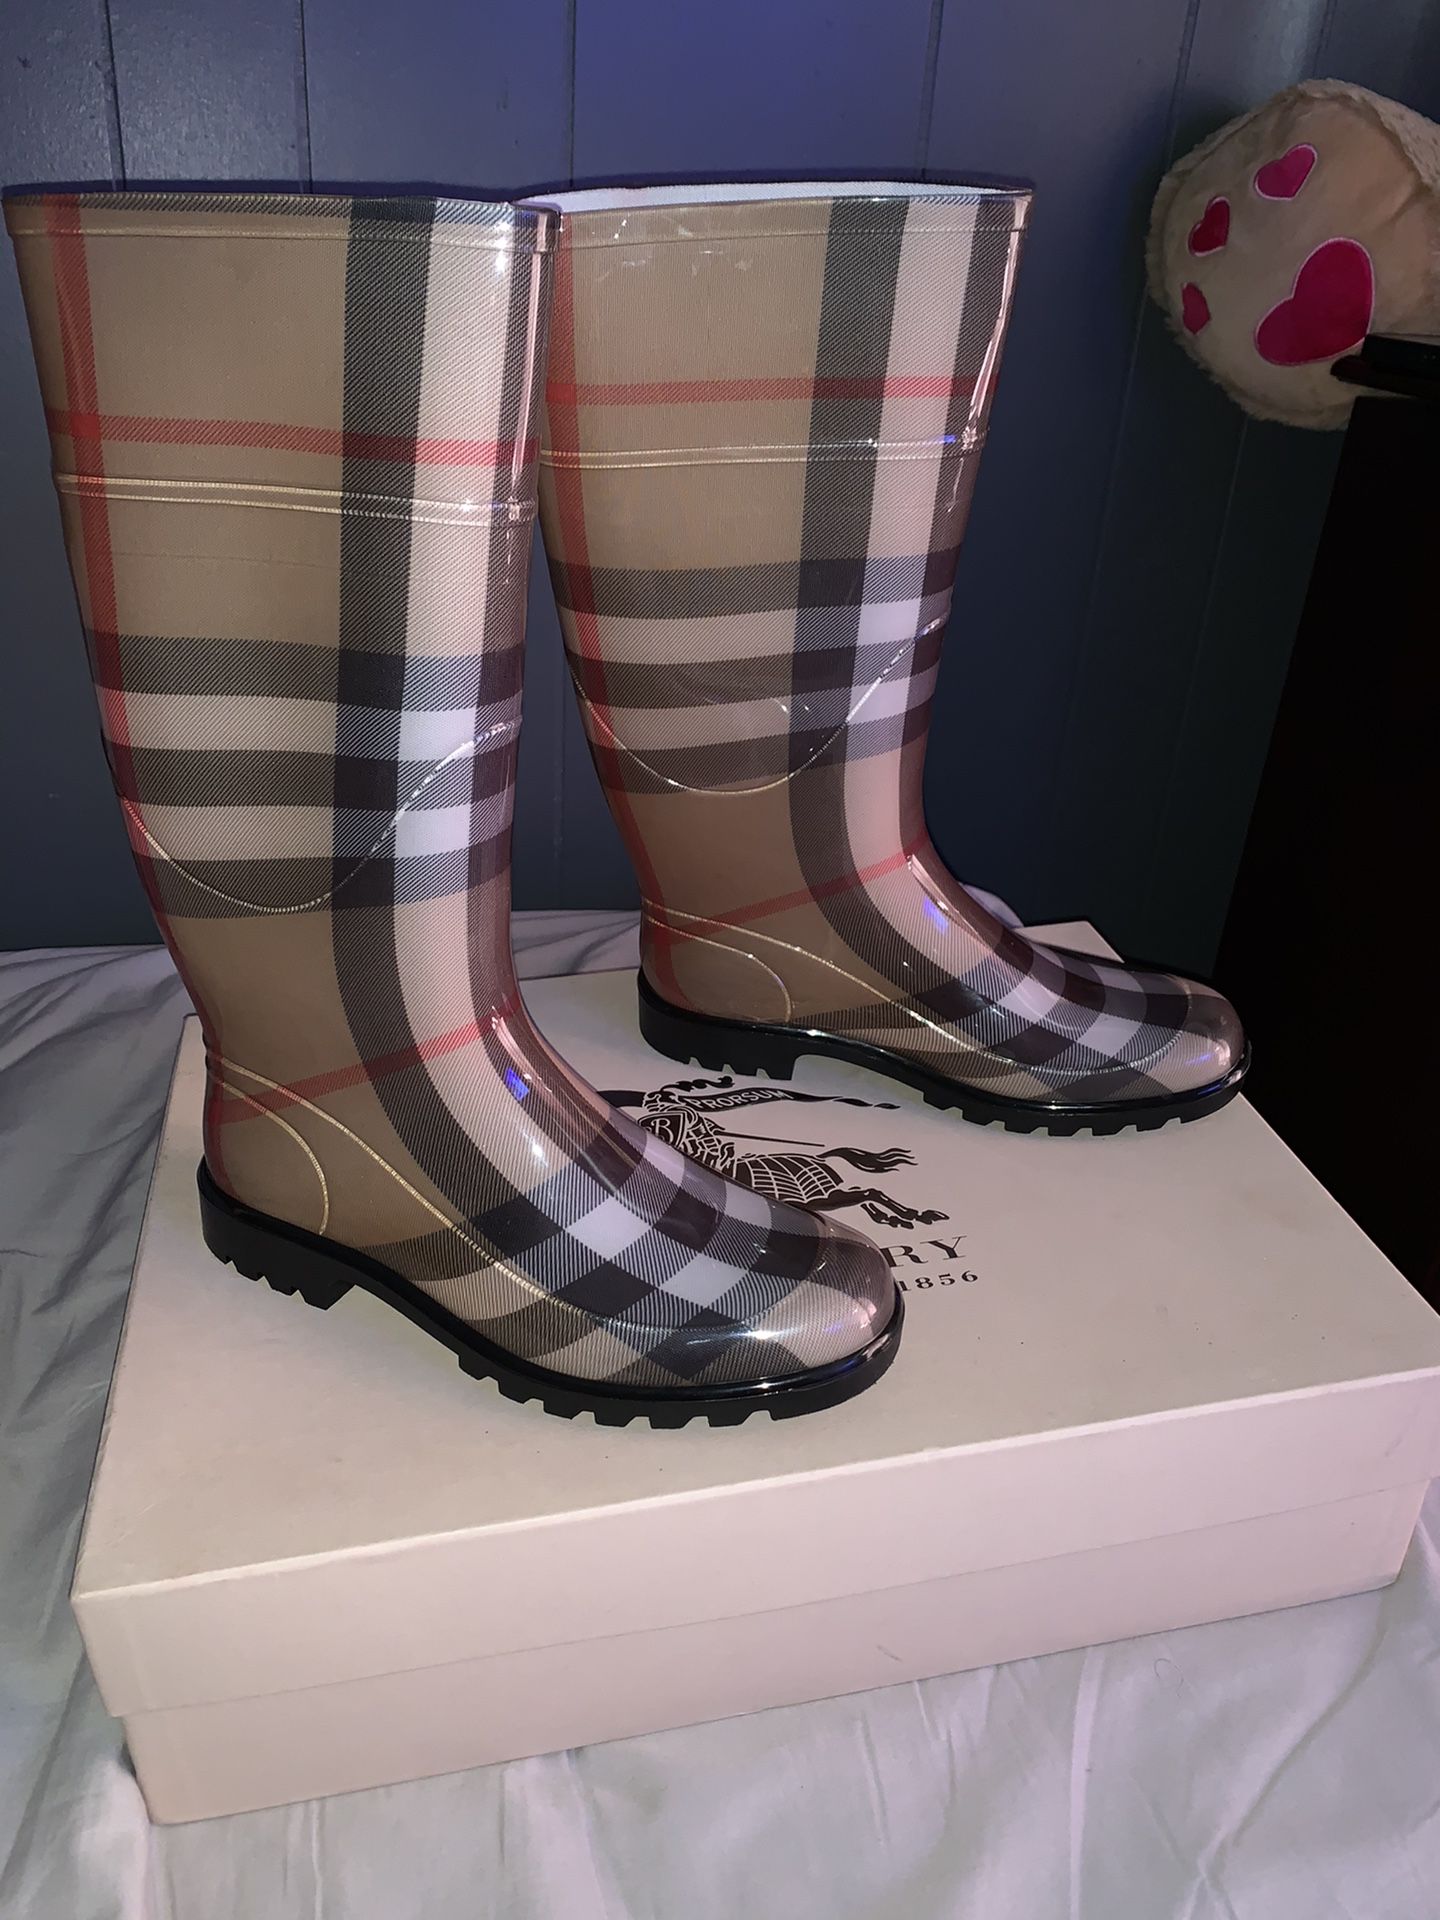 Burberry Rain boots..